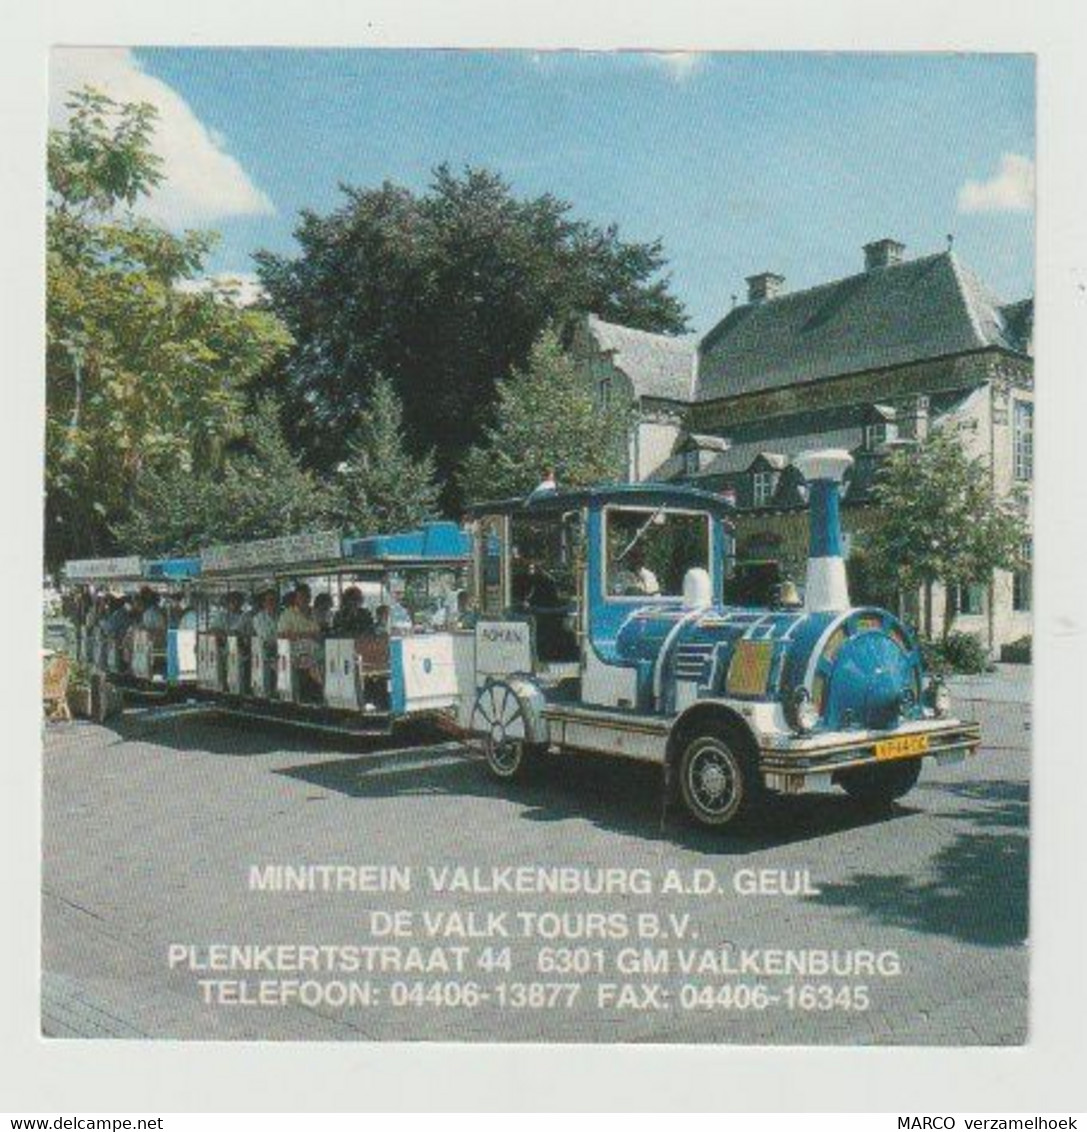 Vervoersbewijs Minitrein De Valk Tours Valkenburg (NL) - Europe